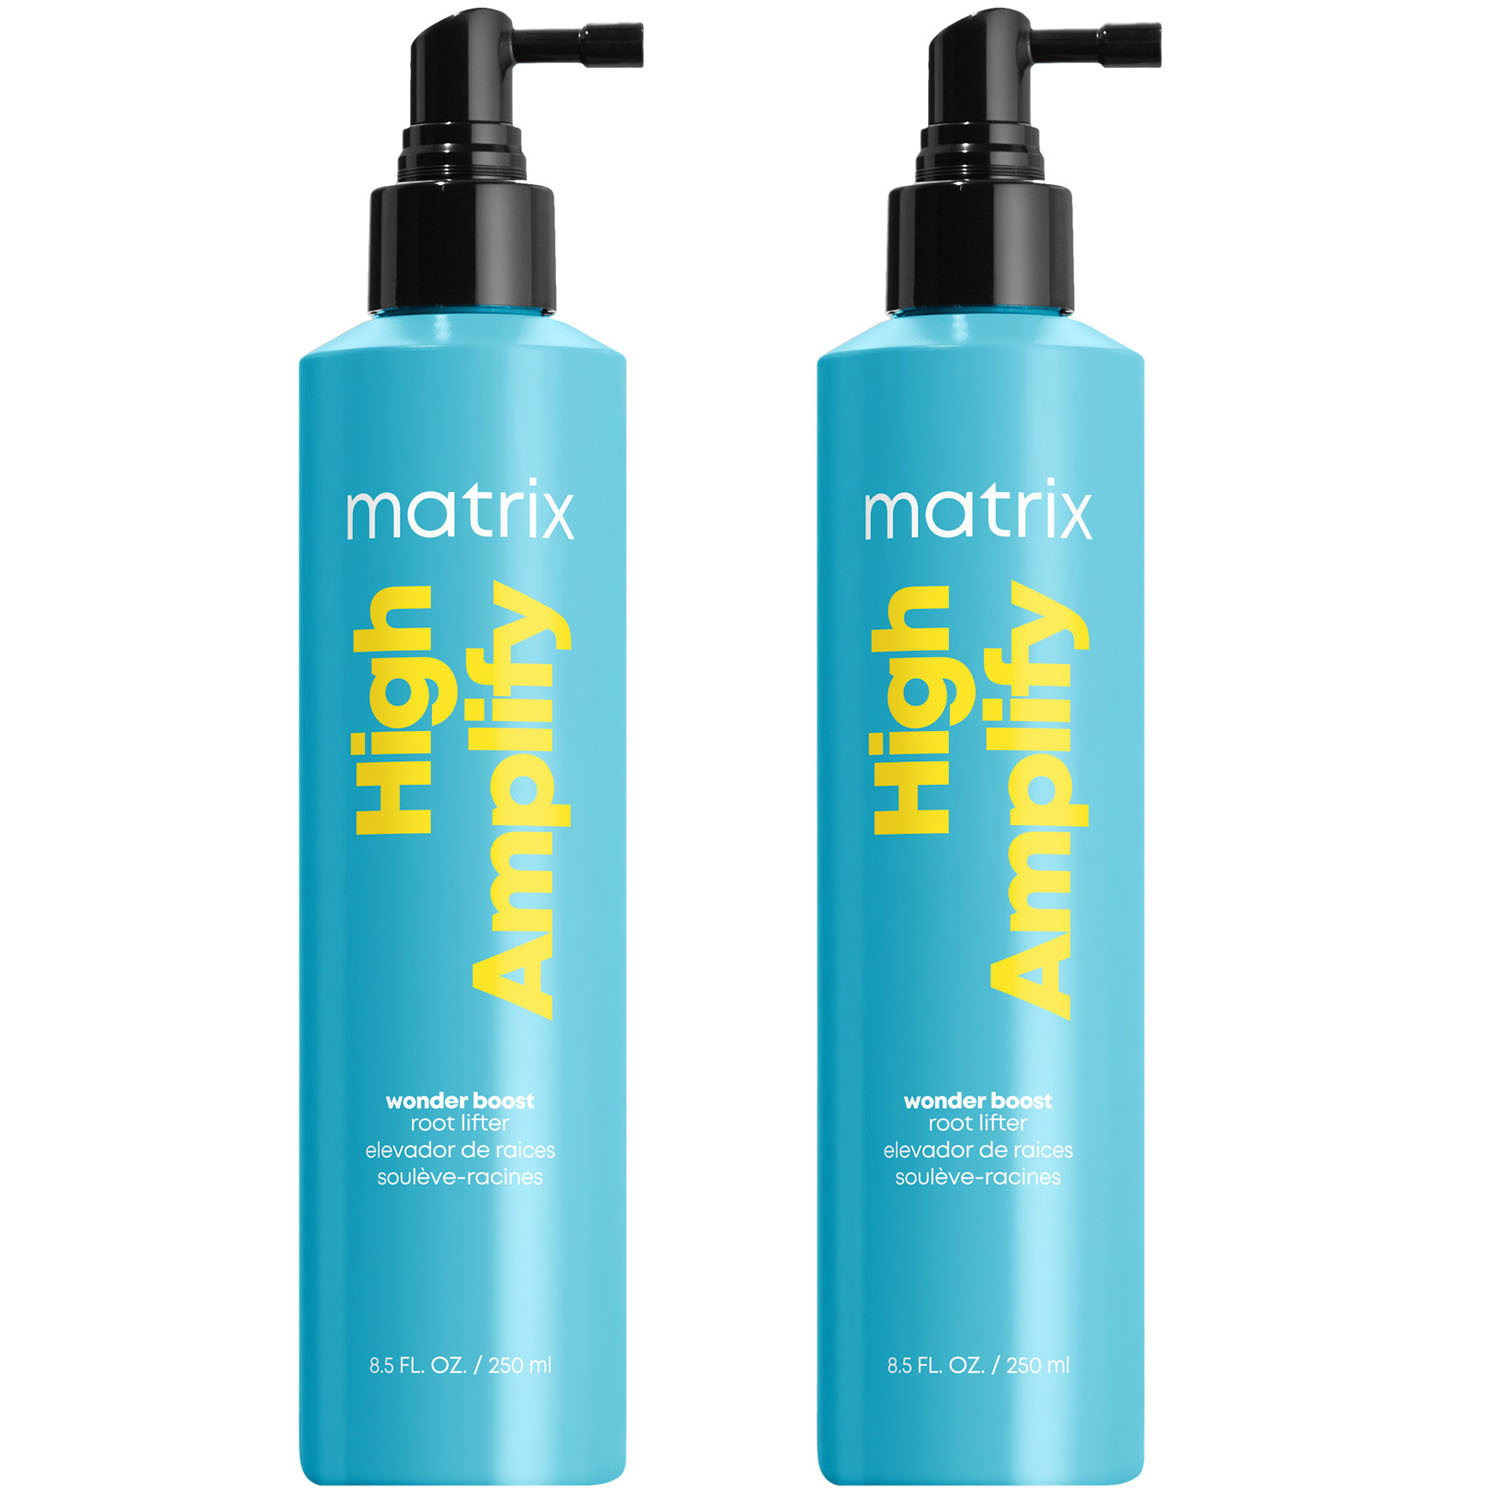 Matrix Набор для прикорневого объема Wonder Boost Root Lifter, 2 шт х 250 мл (Matrix, Total results) matrix средство для прикорневого объема волос wonder boost 250 мл